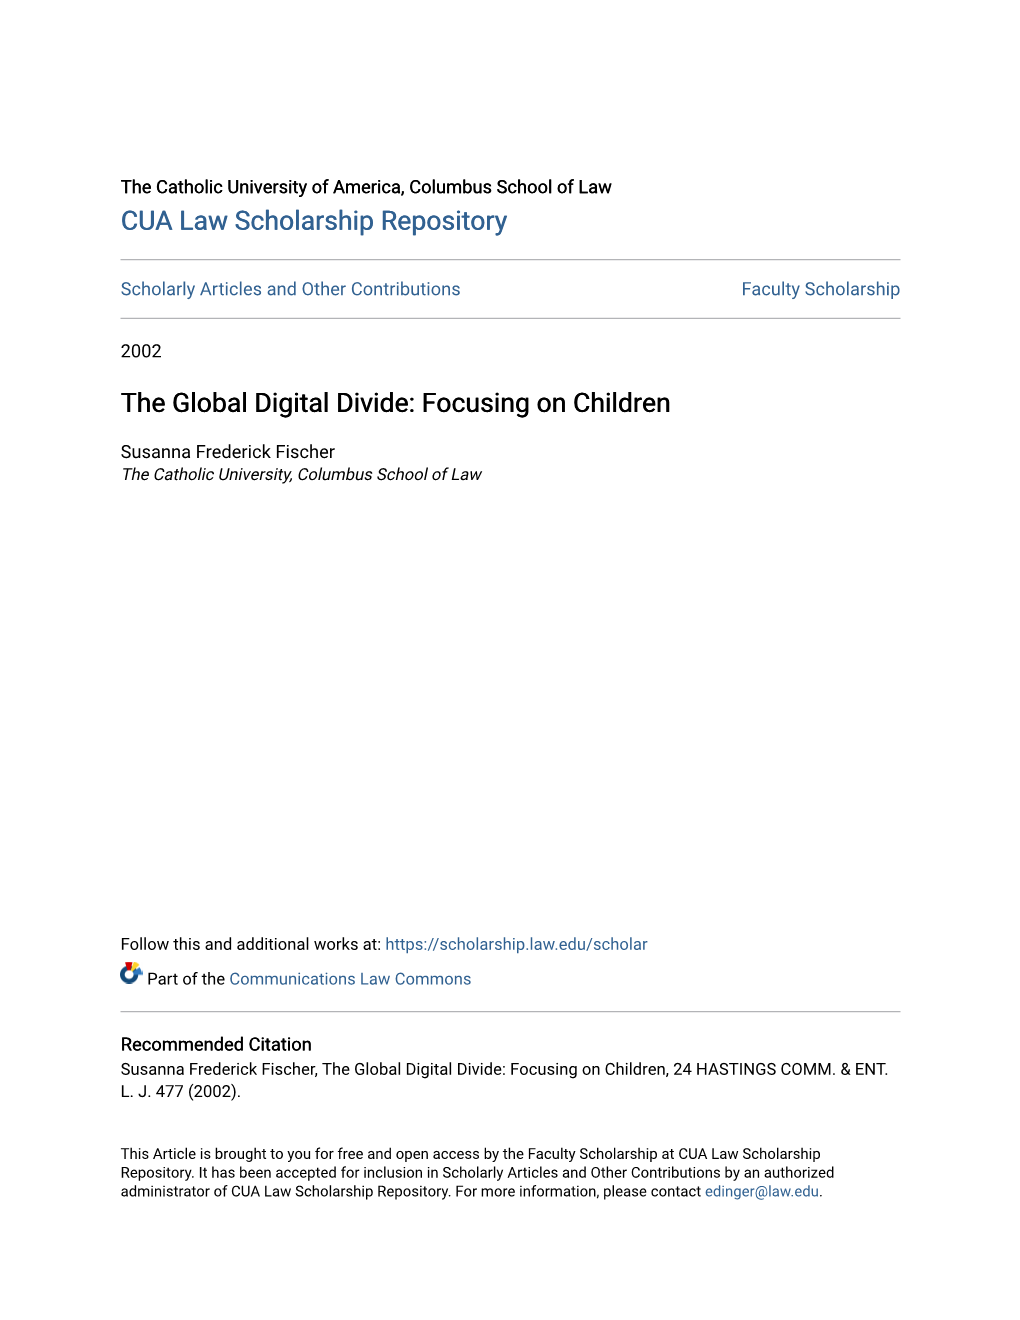 The Global Digital Divide: Focusing on Children